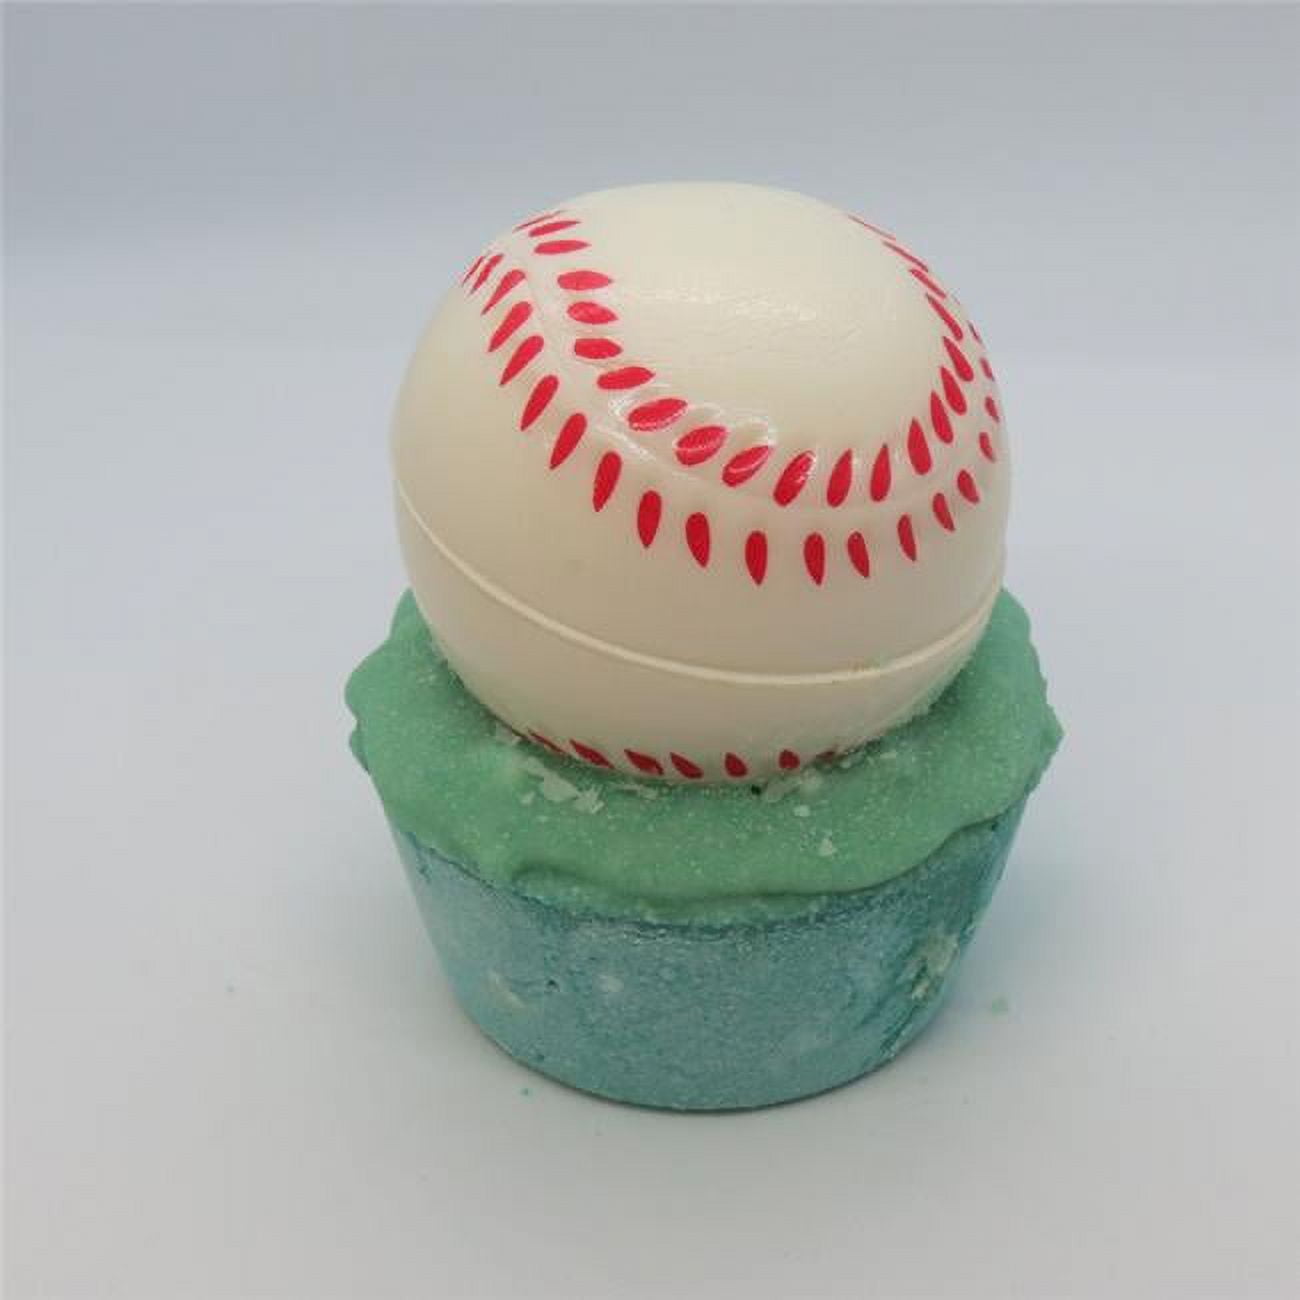 Picture of Sassy Bubbles BaseballBathBomb Baseball Bath Bomb